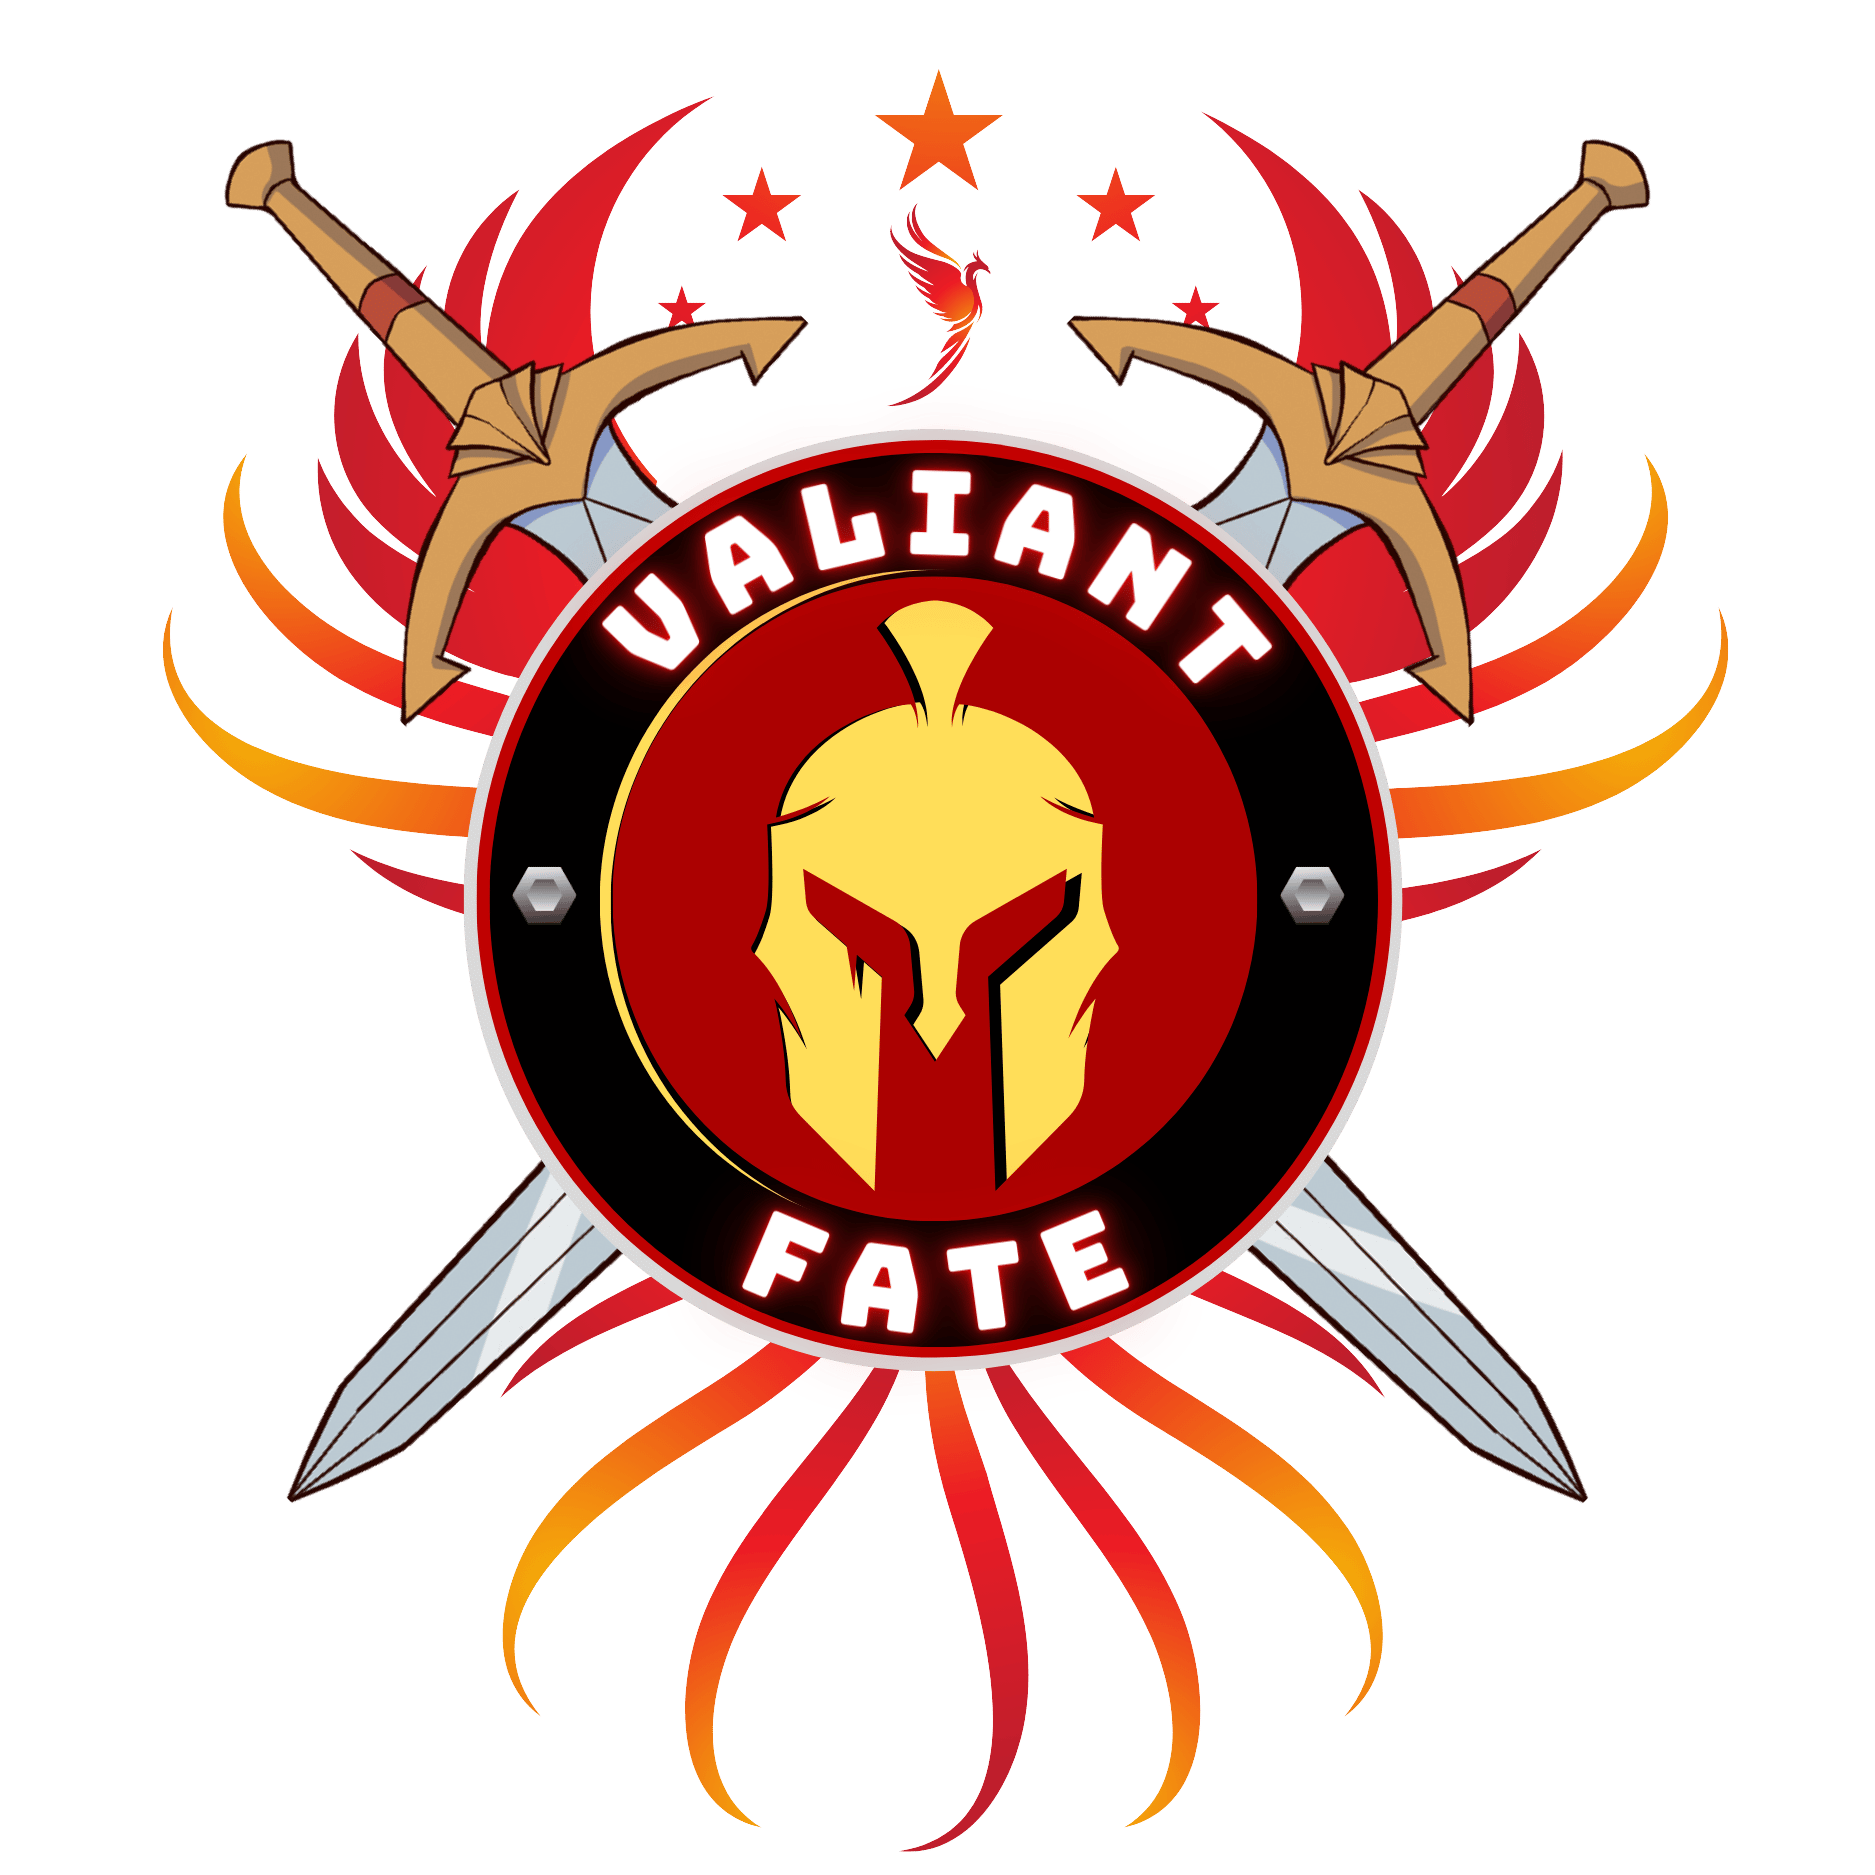 Valiant Fate - Life & Fitness Coaching